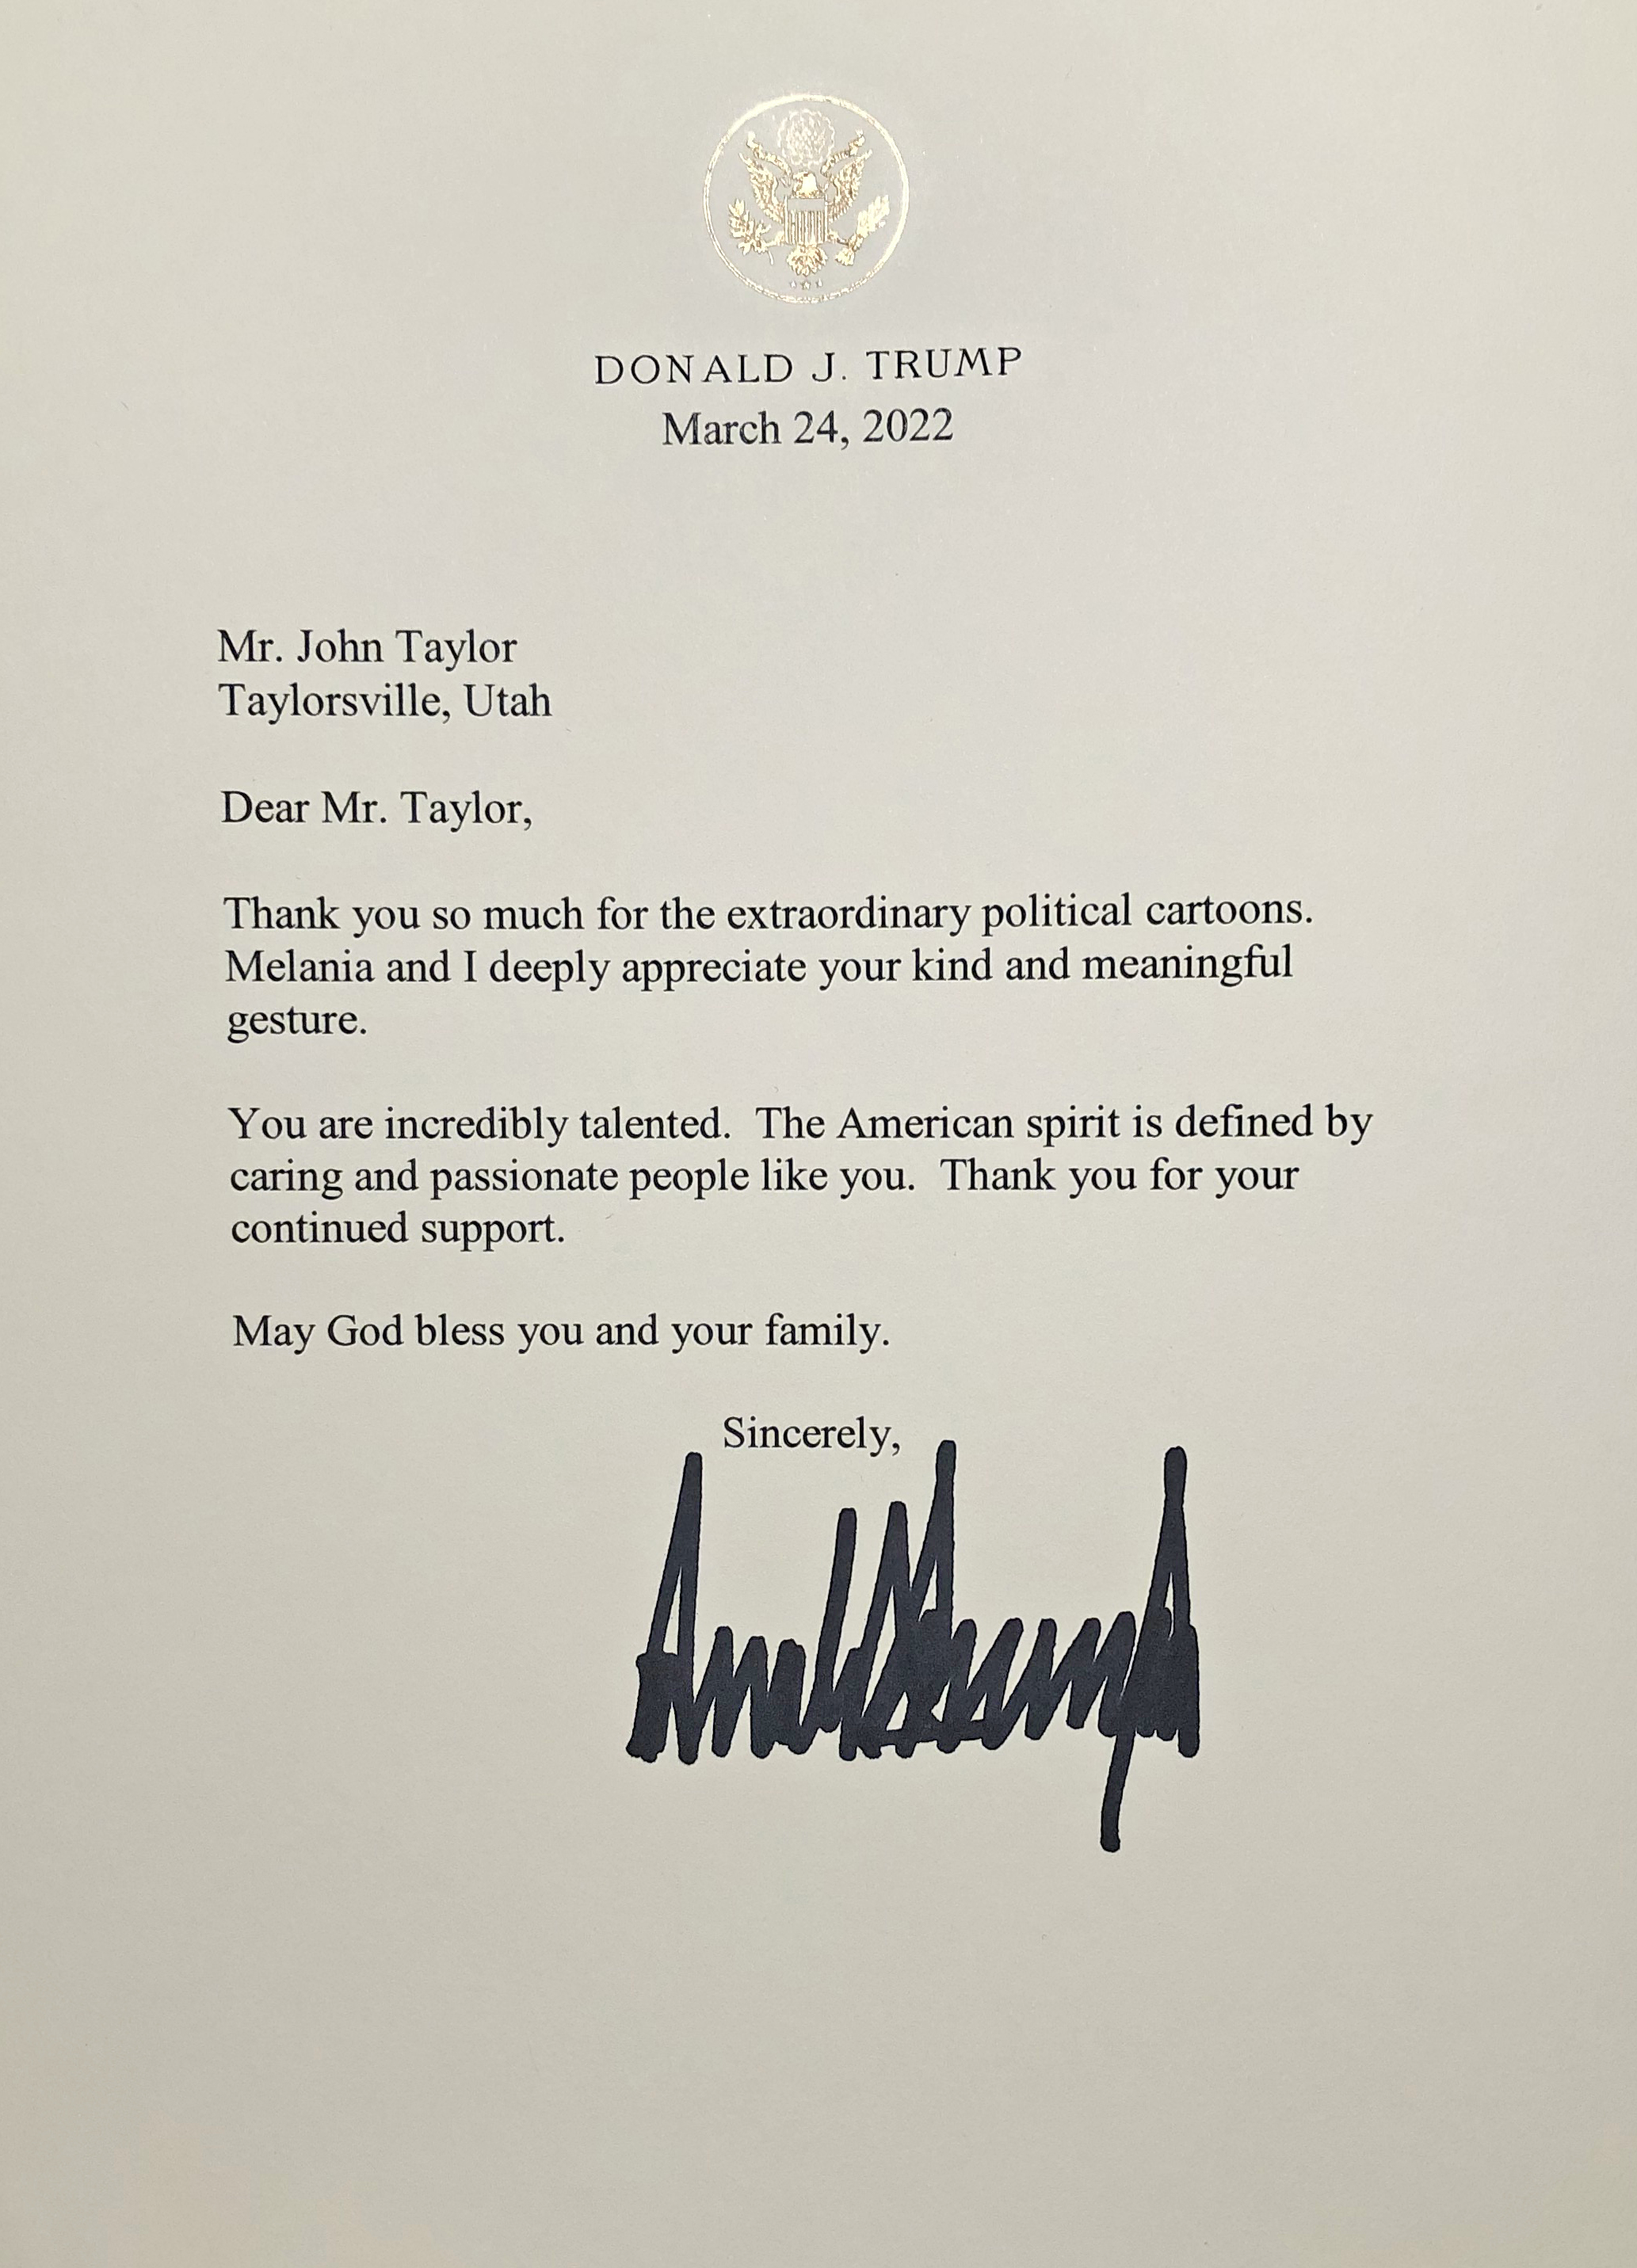 Donald Trump letter endorsing John Taylor political cartoons - March 2022